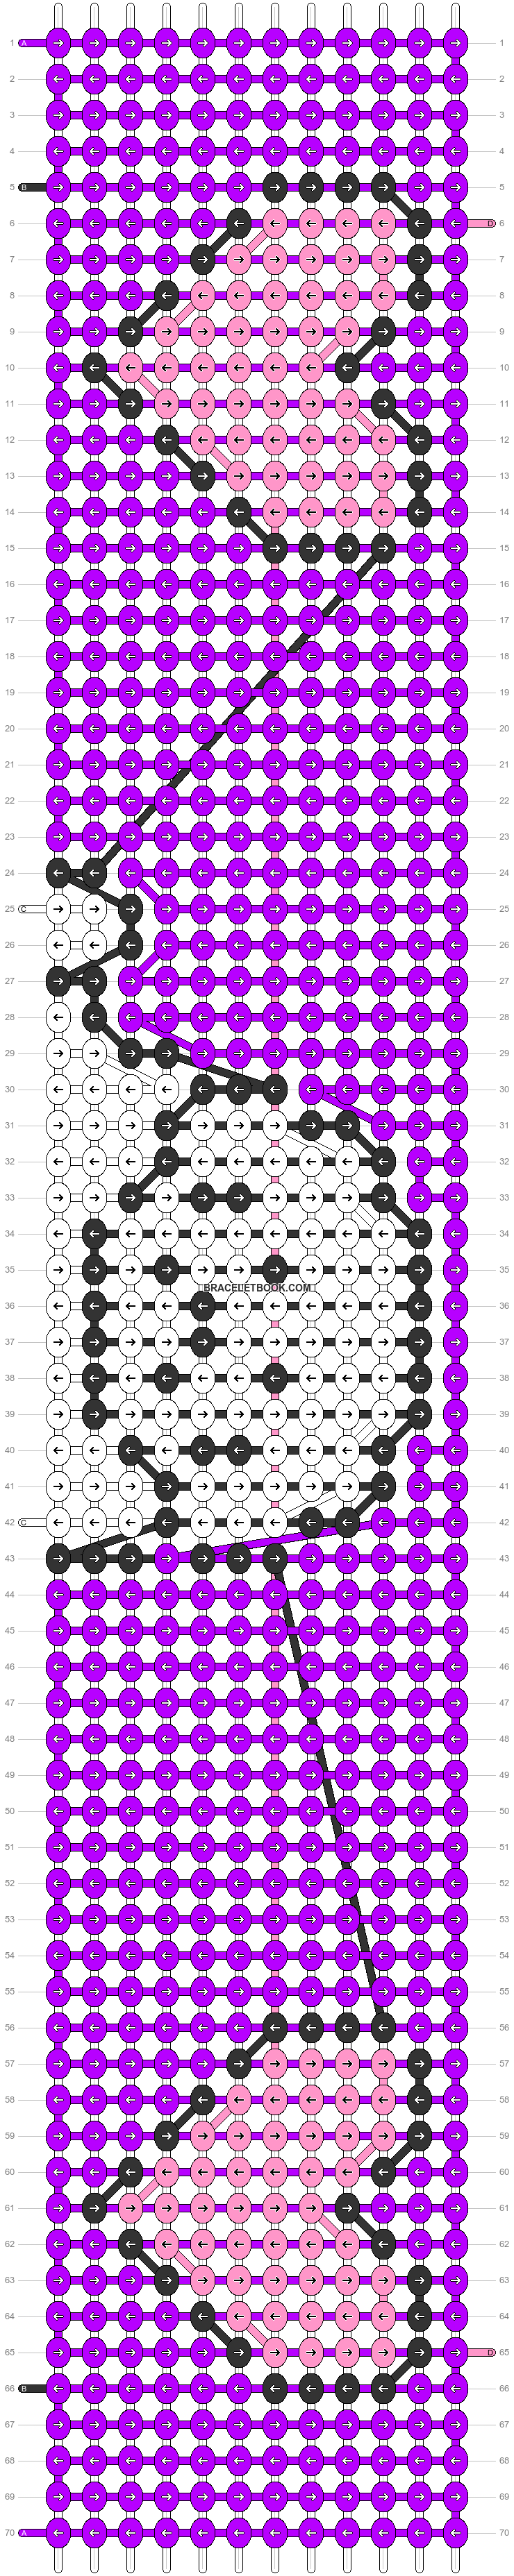 Alpha pattern #59369 variation #115406 pattern